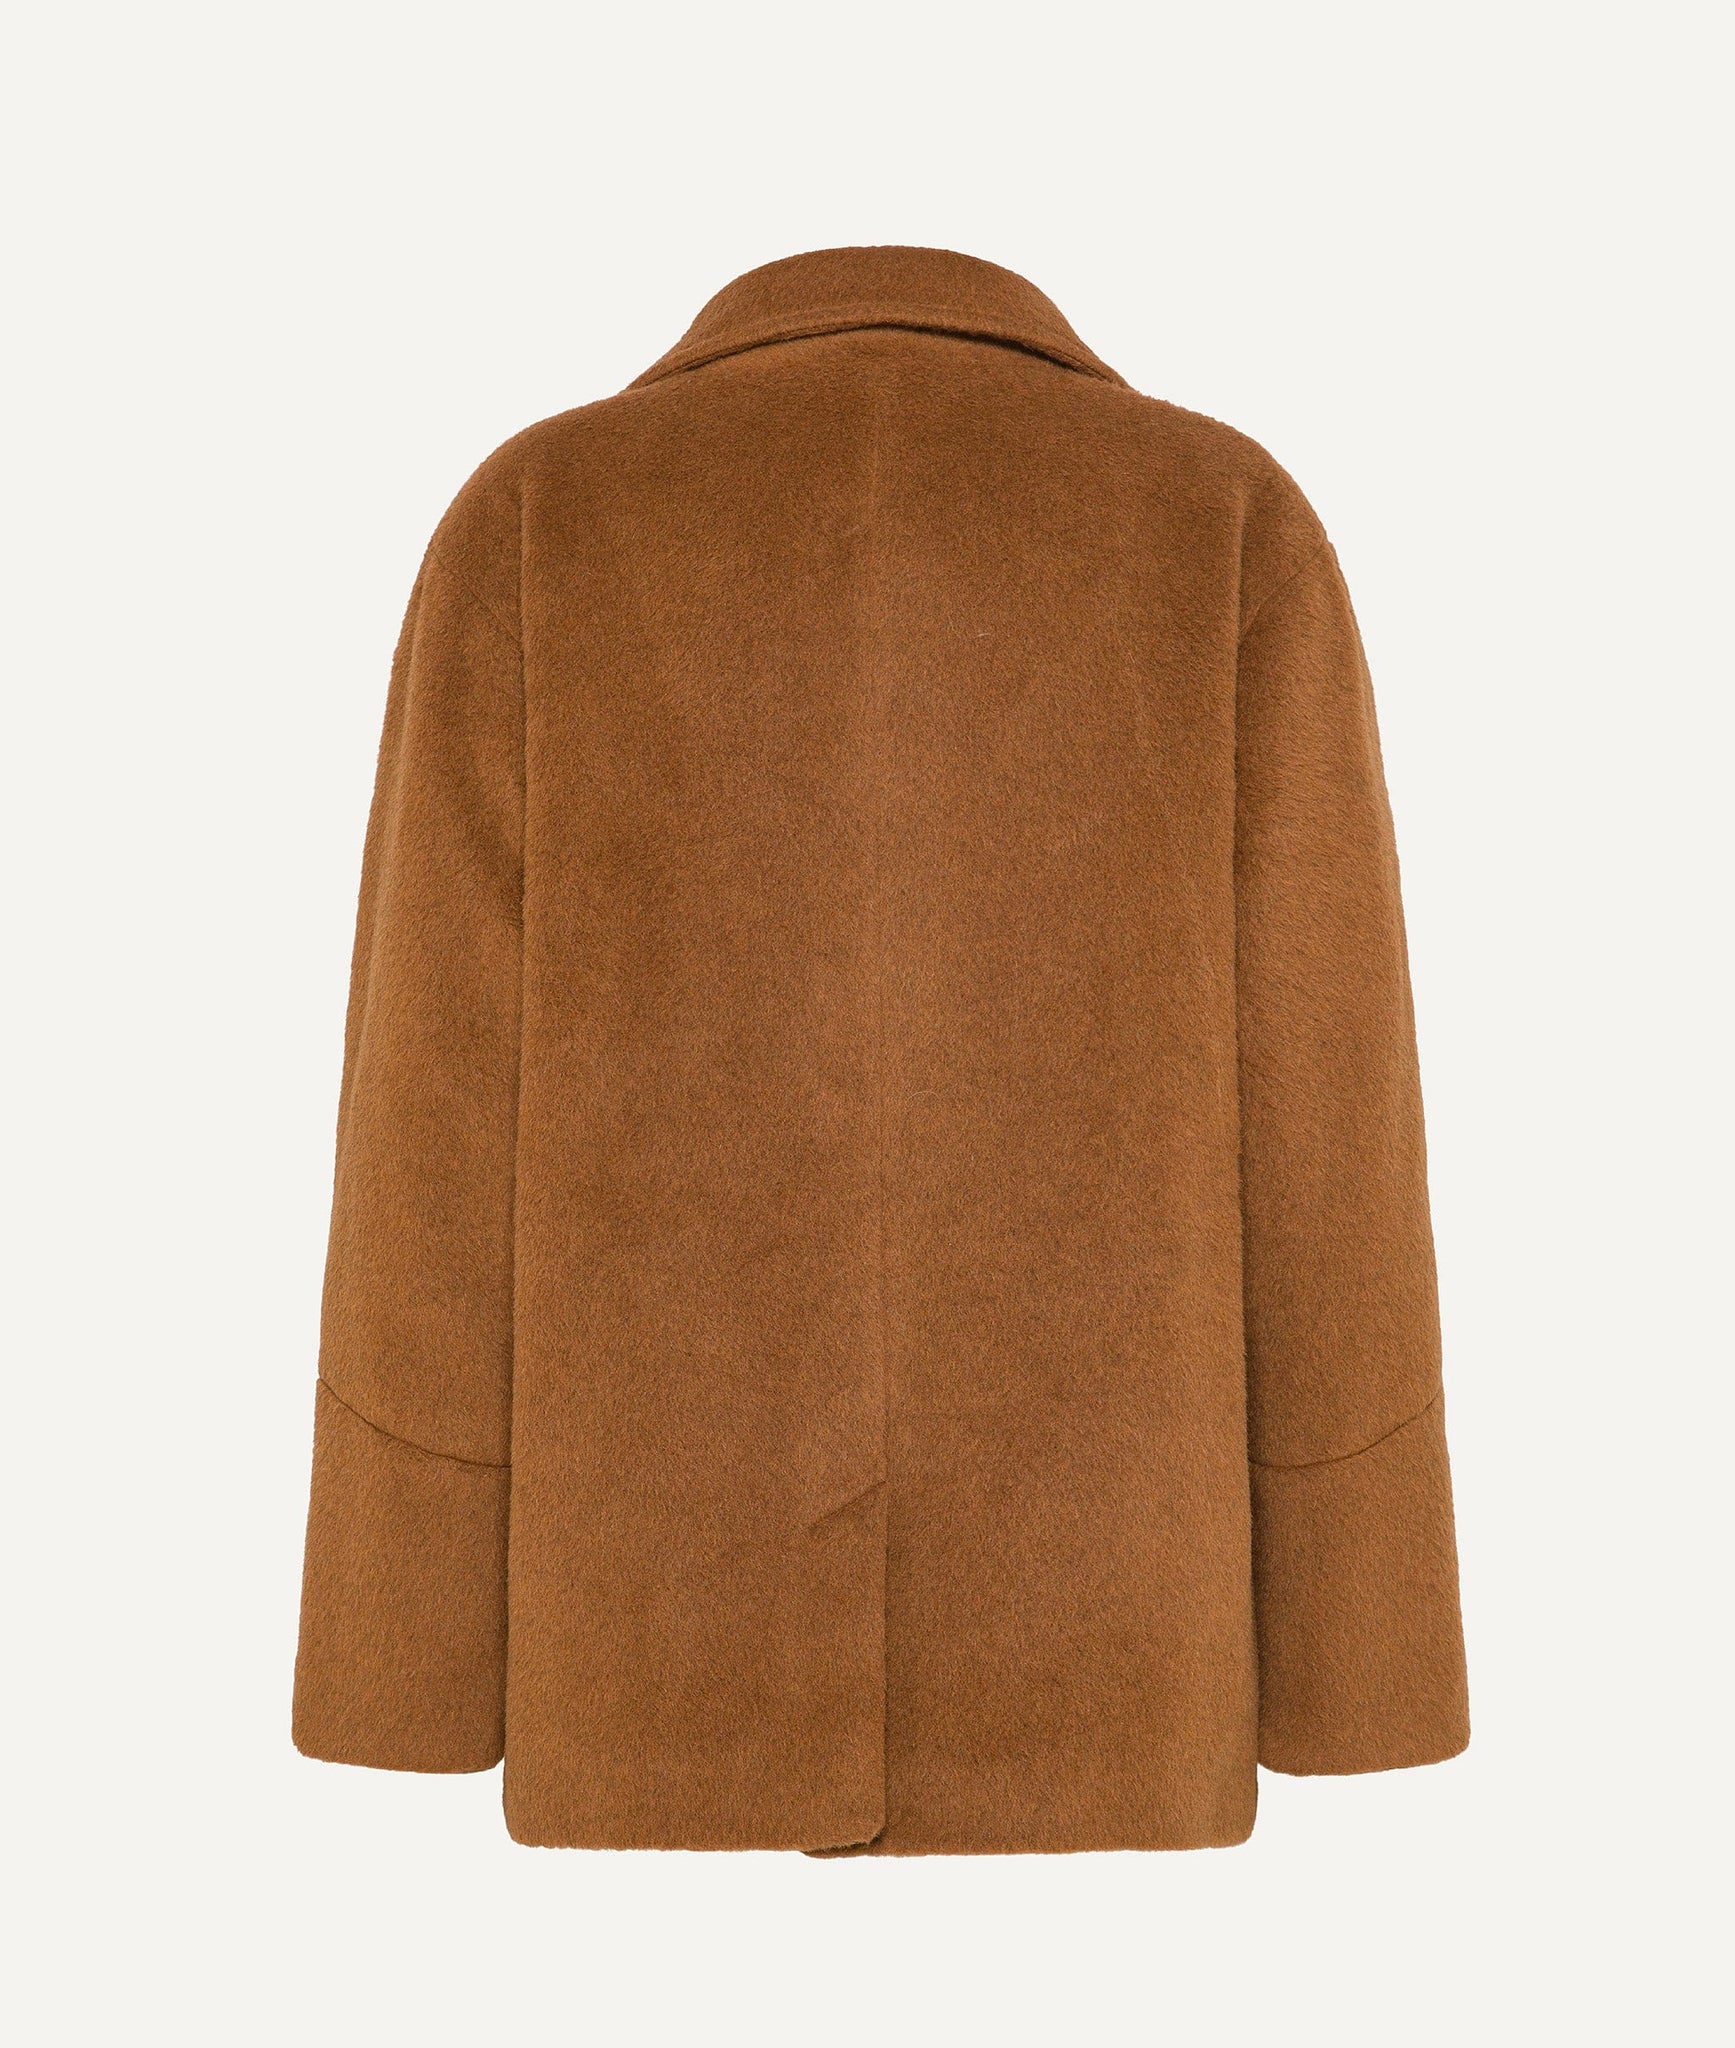 Eleventy - Double Breasted Coat in Alpaca & Wool